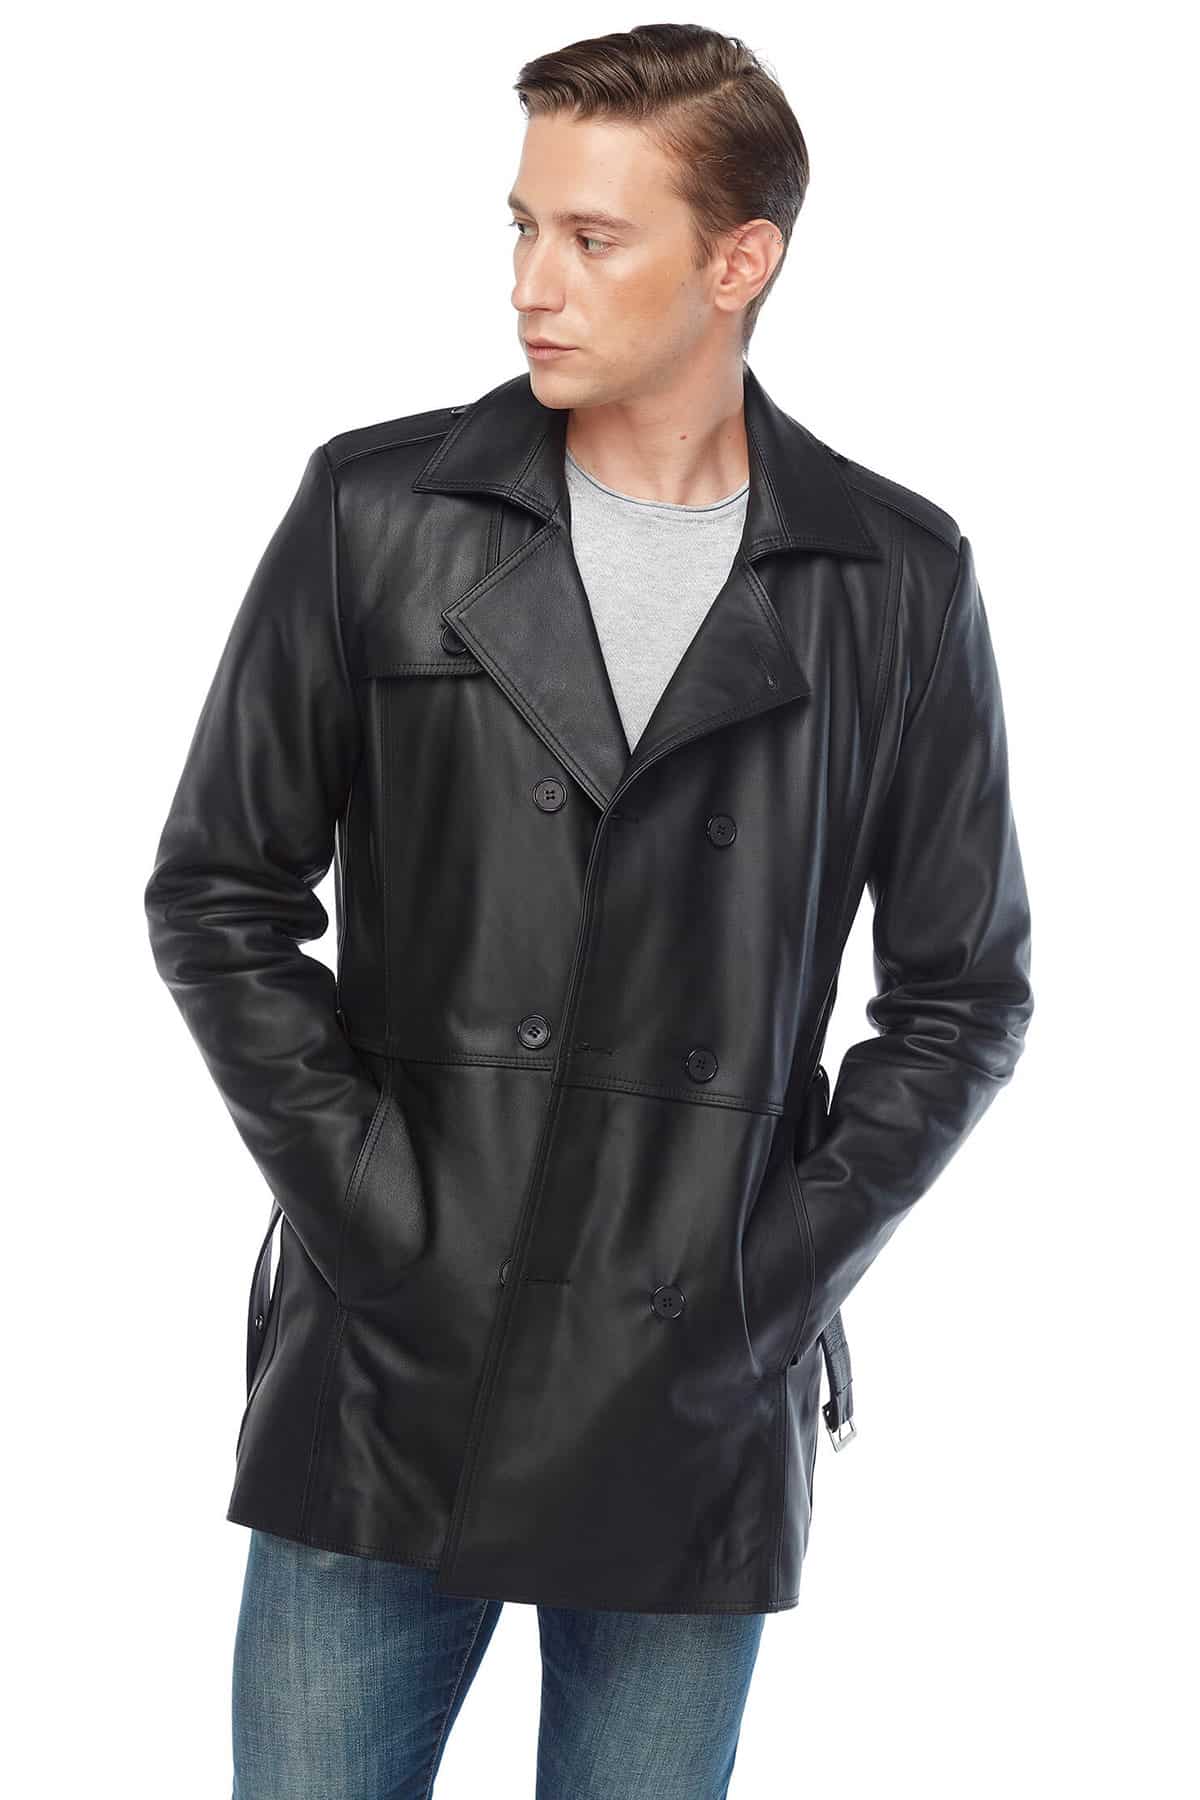 Antonio Banderas Men's 100 % Real Black Leather Trench Coat